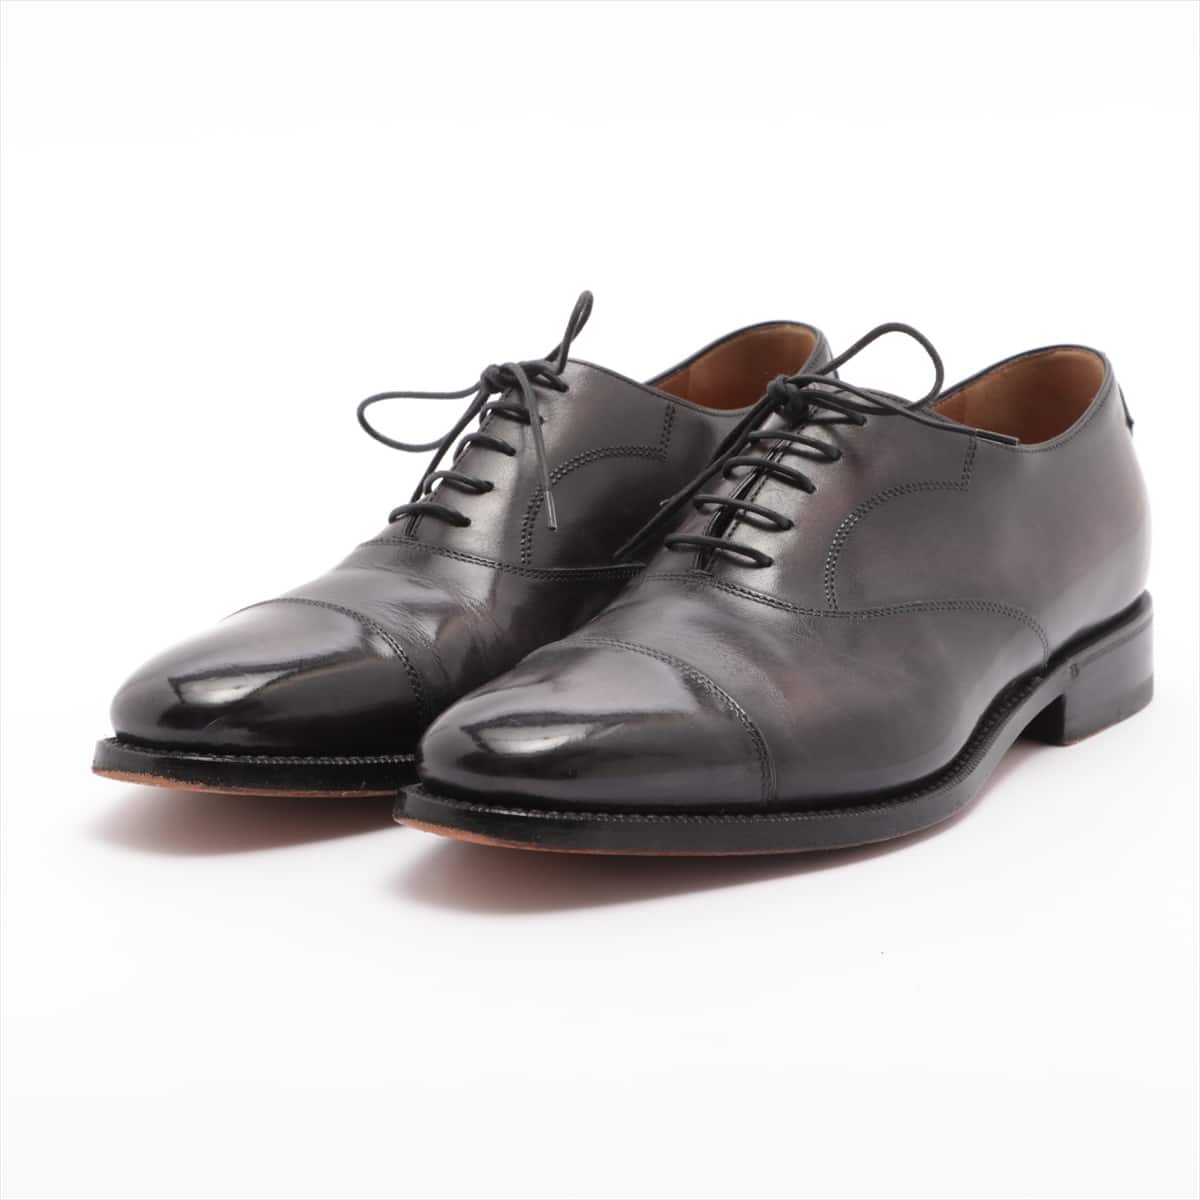 Berluti Leather Leather shoes 7 Men's Black